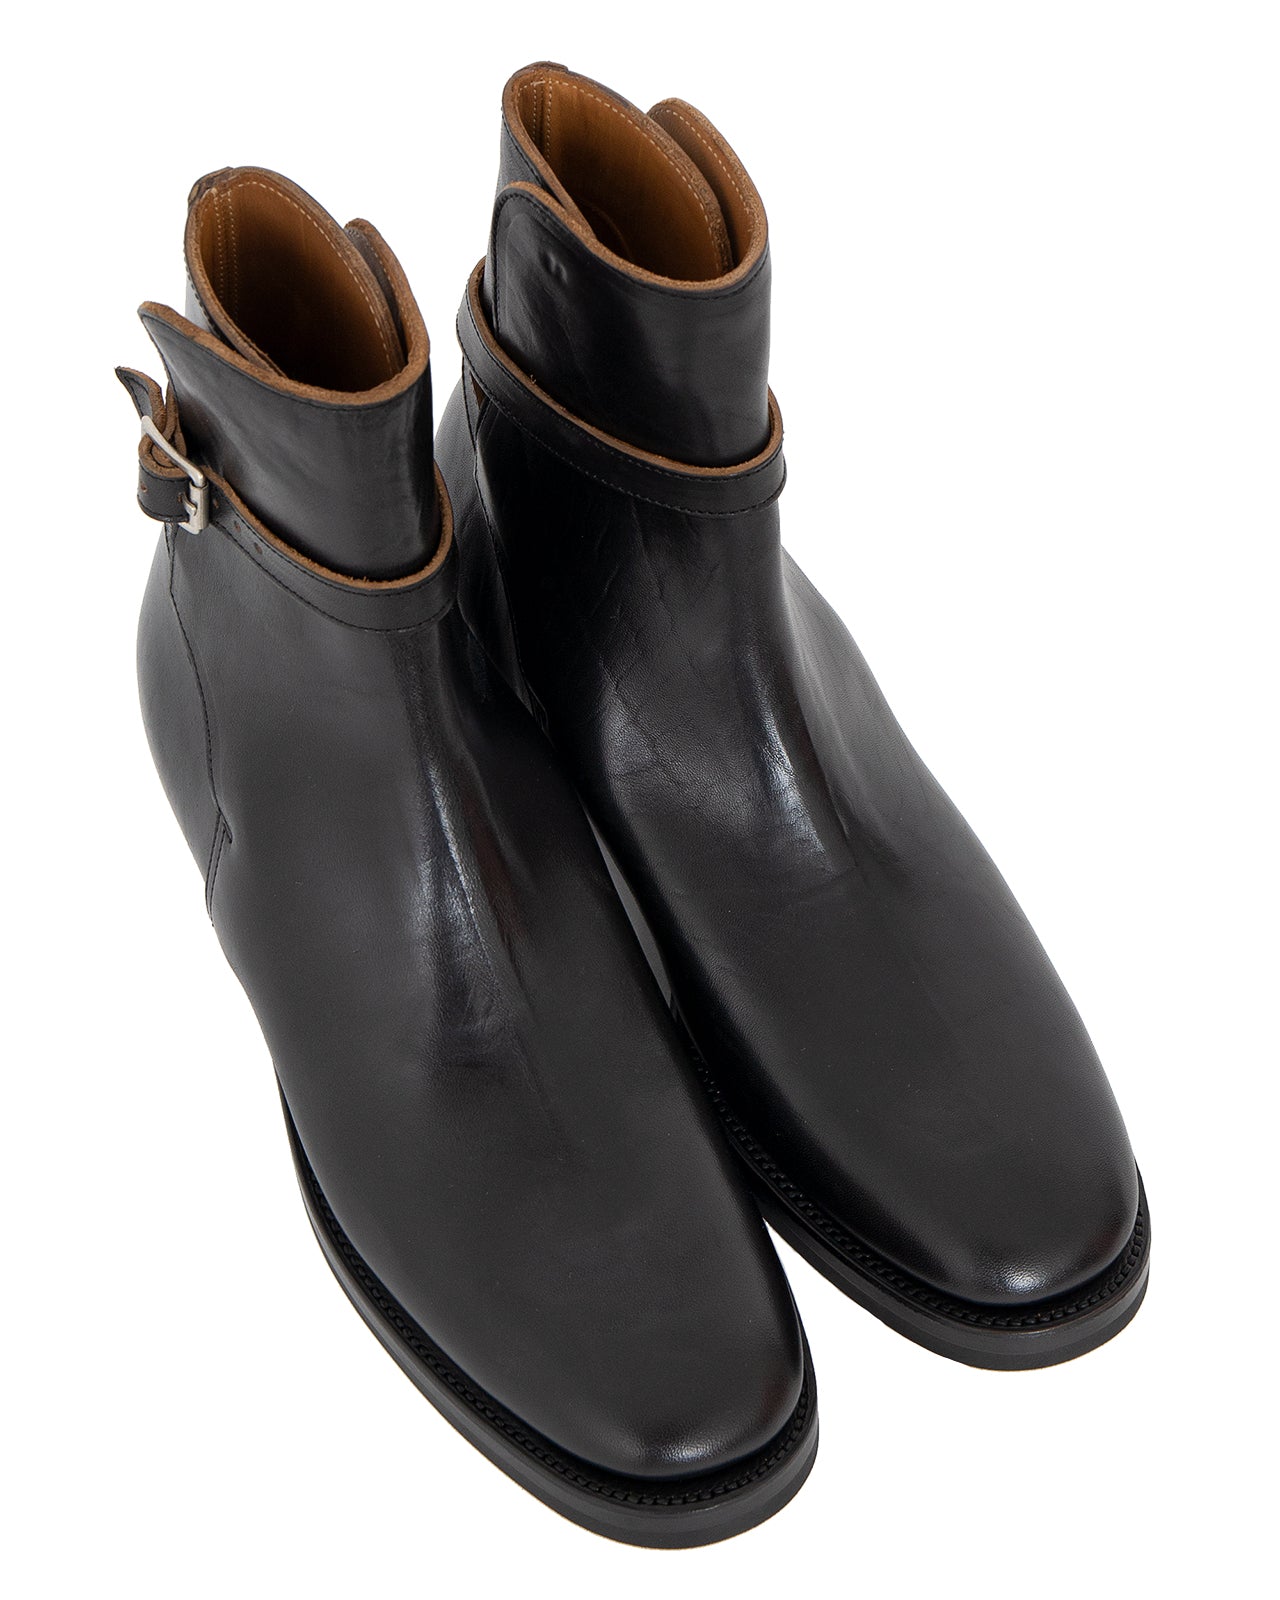 Clinch Jodhpur Boots, CN Last, Horsebutt Overdye Black